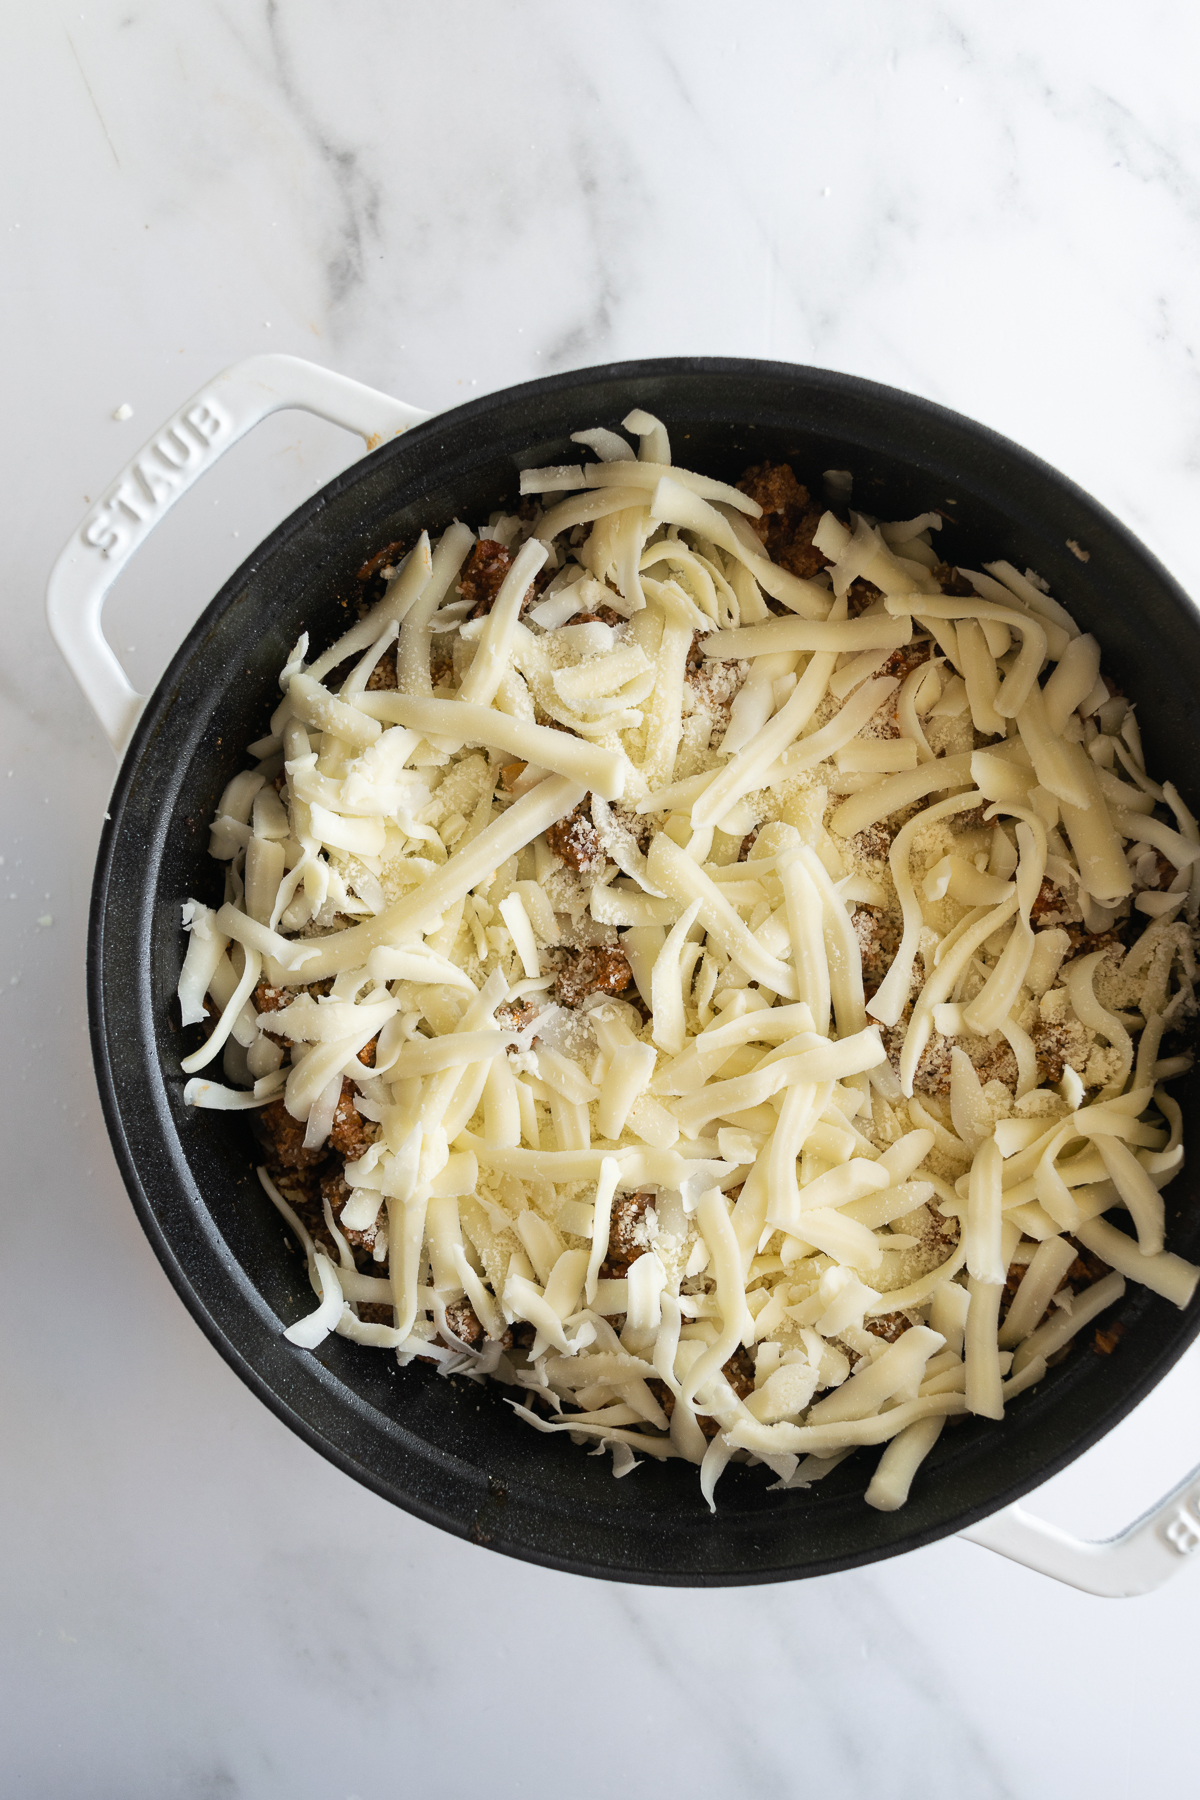 uncooked frozen ravioli in a black pot covered in shredded mozzarella cheese.